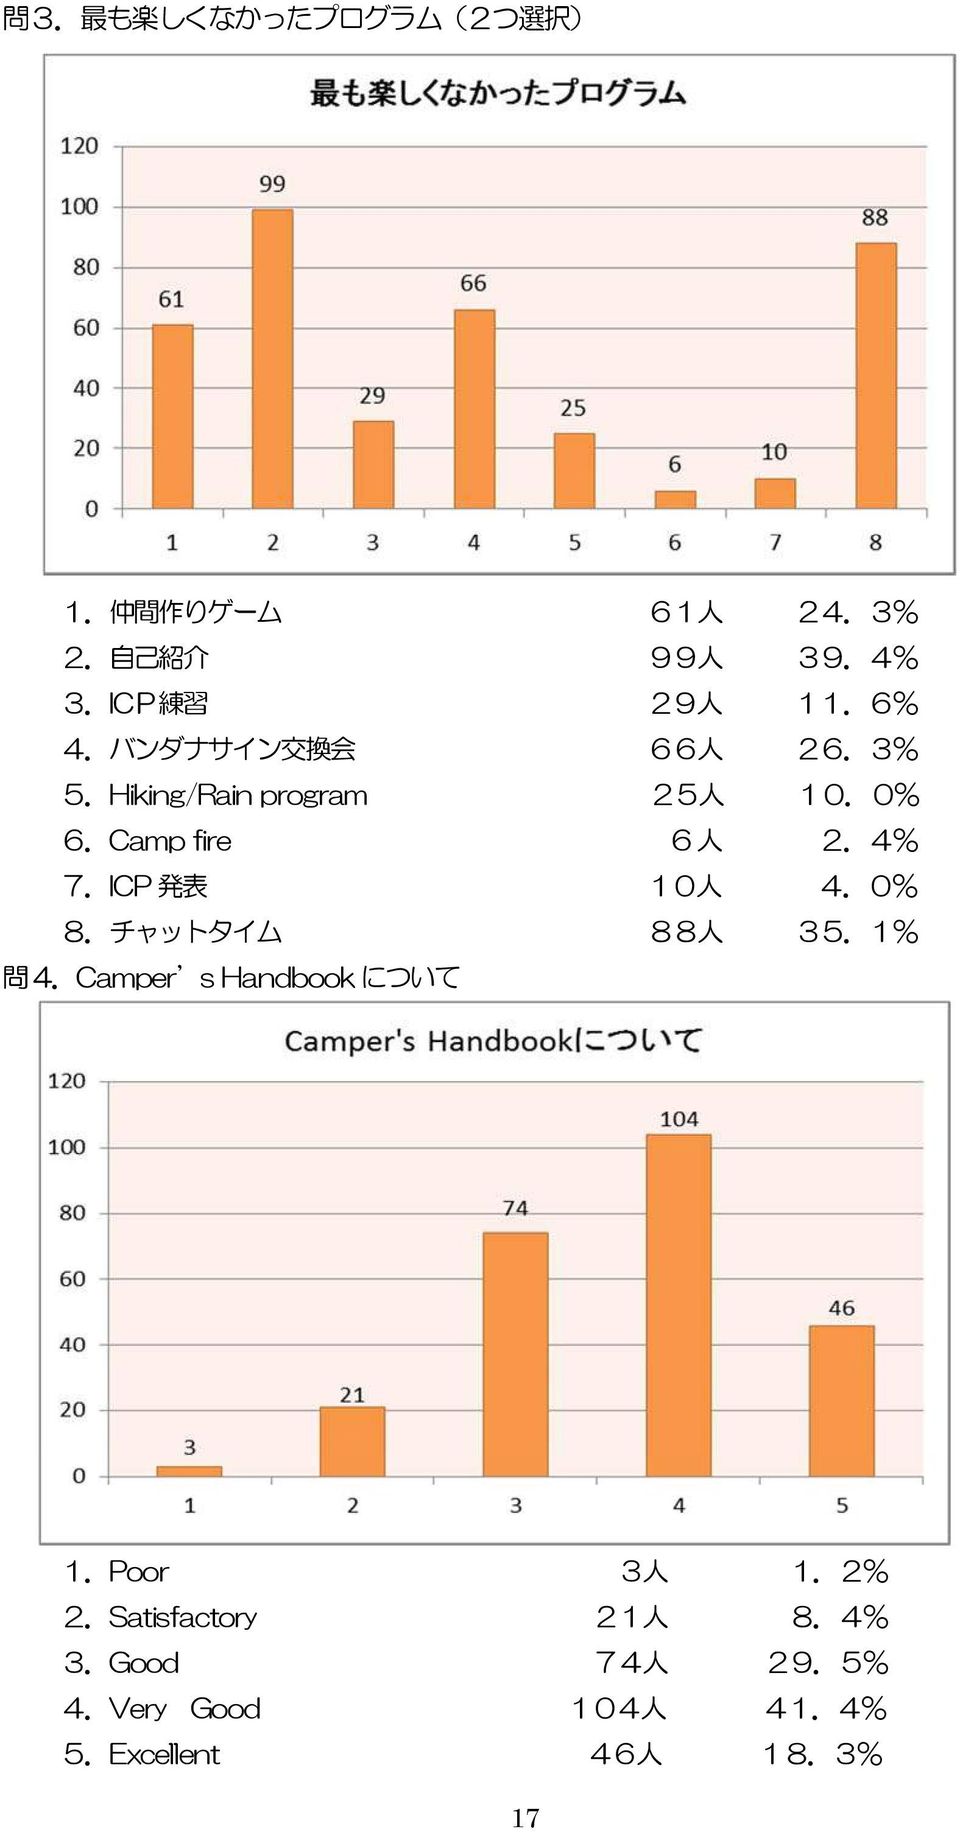 Camp fire 6 人 2.4% 7.ICP 発 表 10 人 4.0% 8.チャットタイム 88 人 35.1% 問 4.Camper s Handbook について 1.